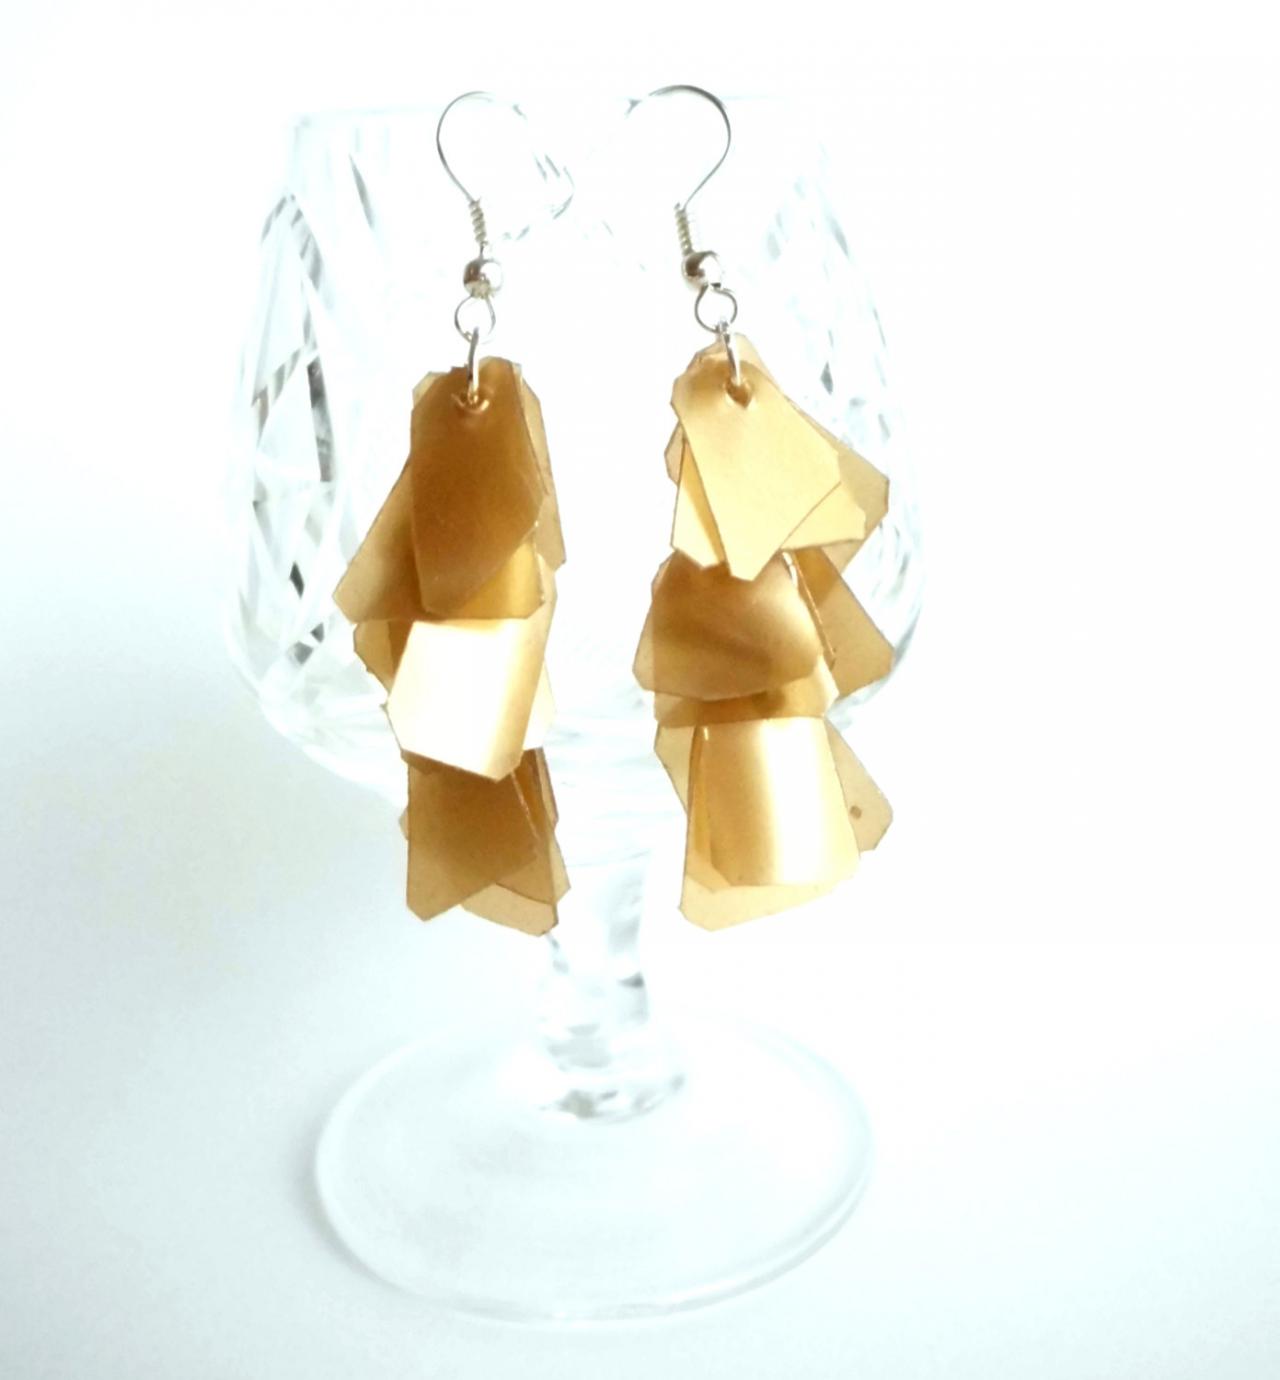 Golden Brown Earrings Handmade Of Recycled Plastic Bottle, Upcycled Jewelry, Ecofriendly, Long Repurposed Earrings